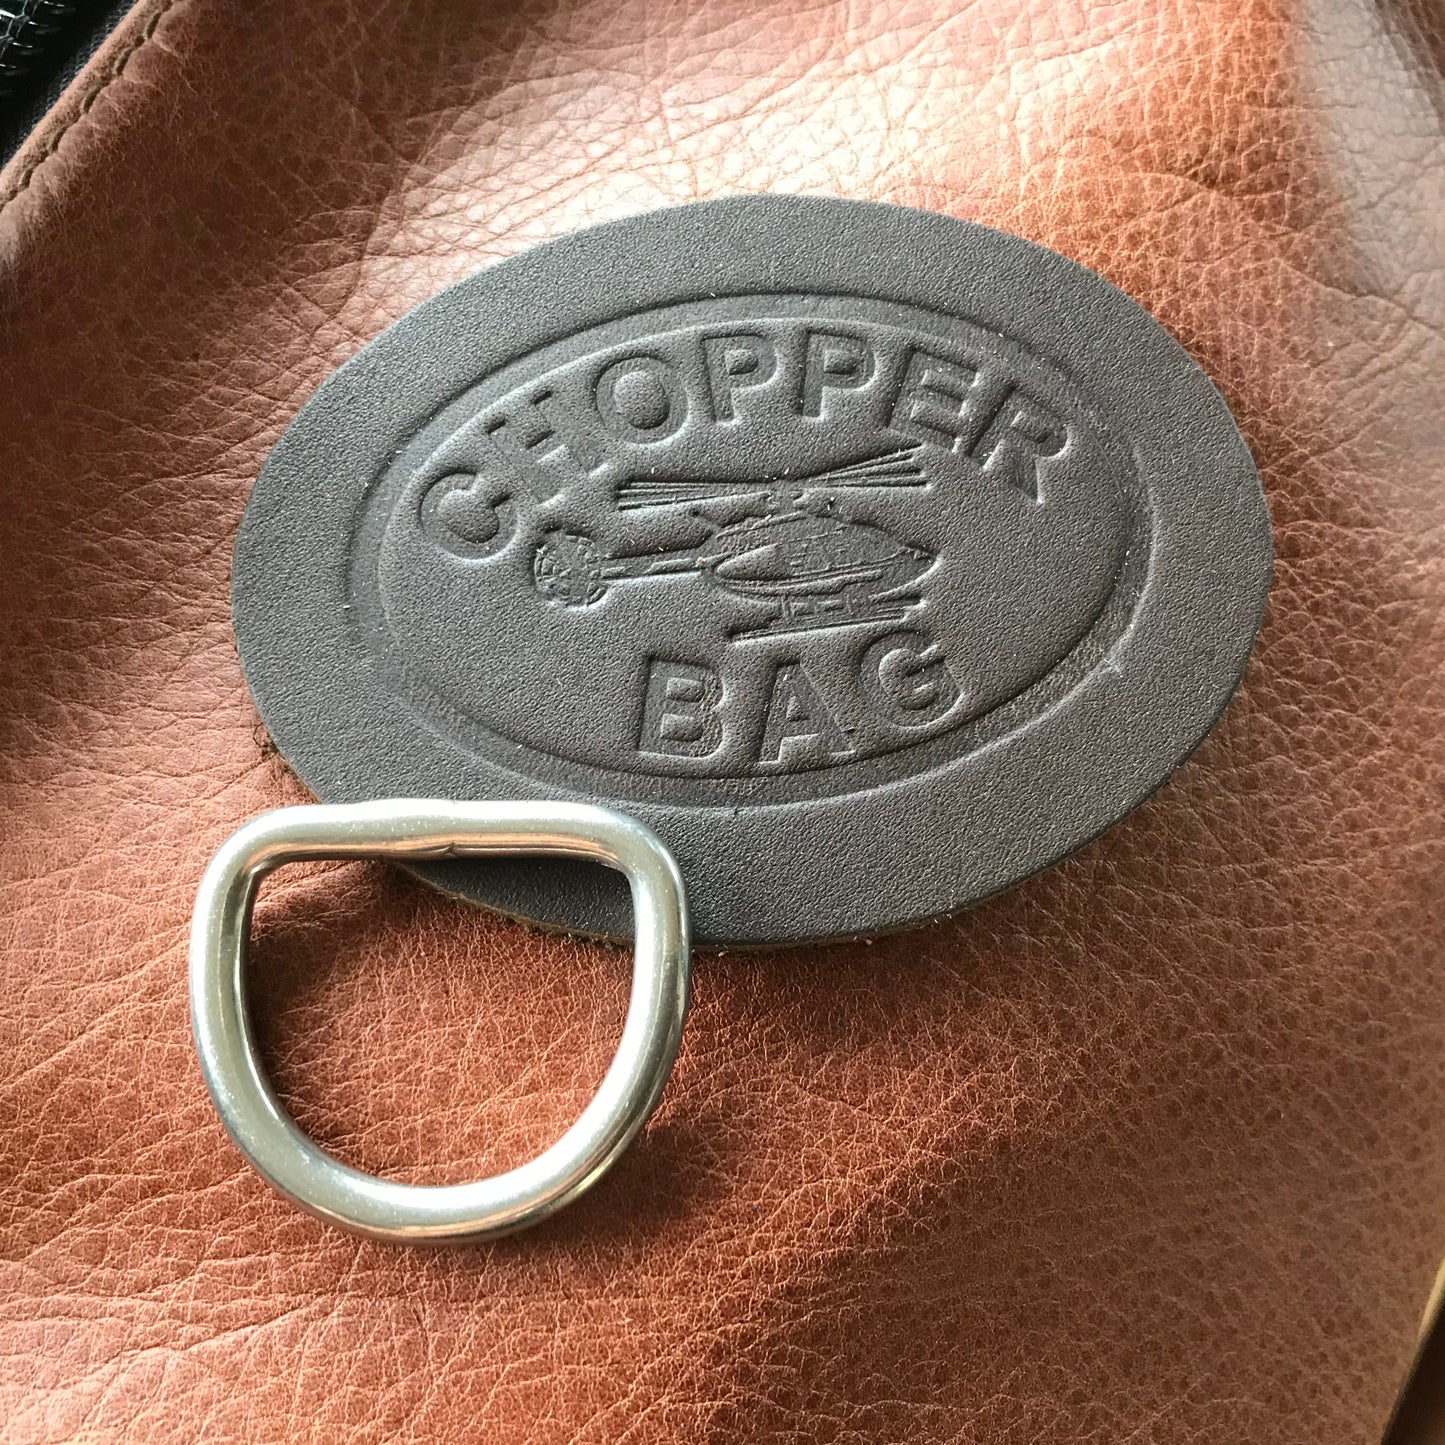 Chopper Bag - Premium “Copper” Leather Range